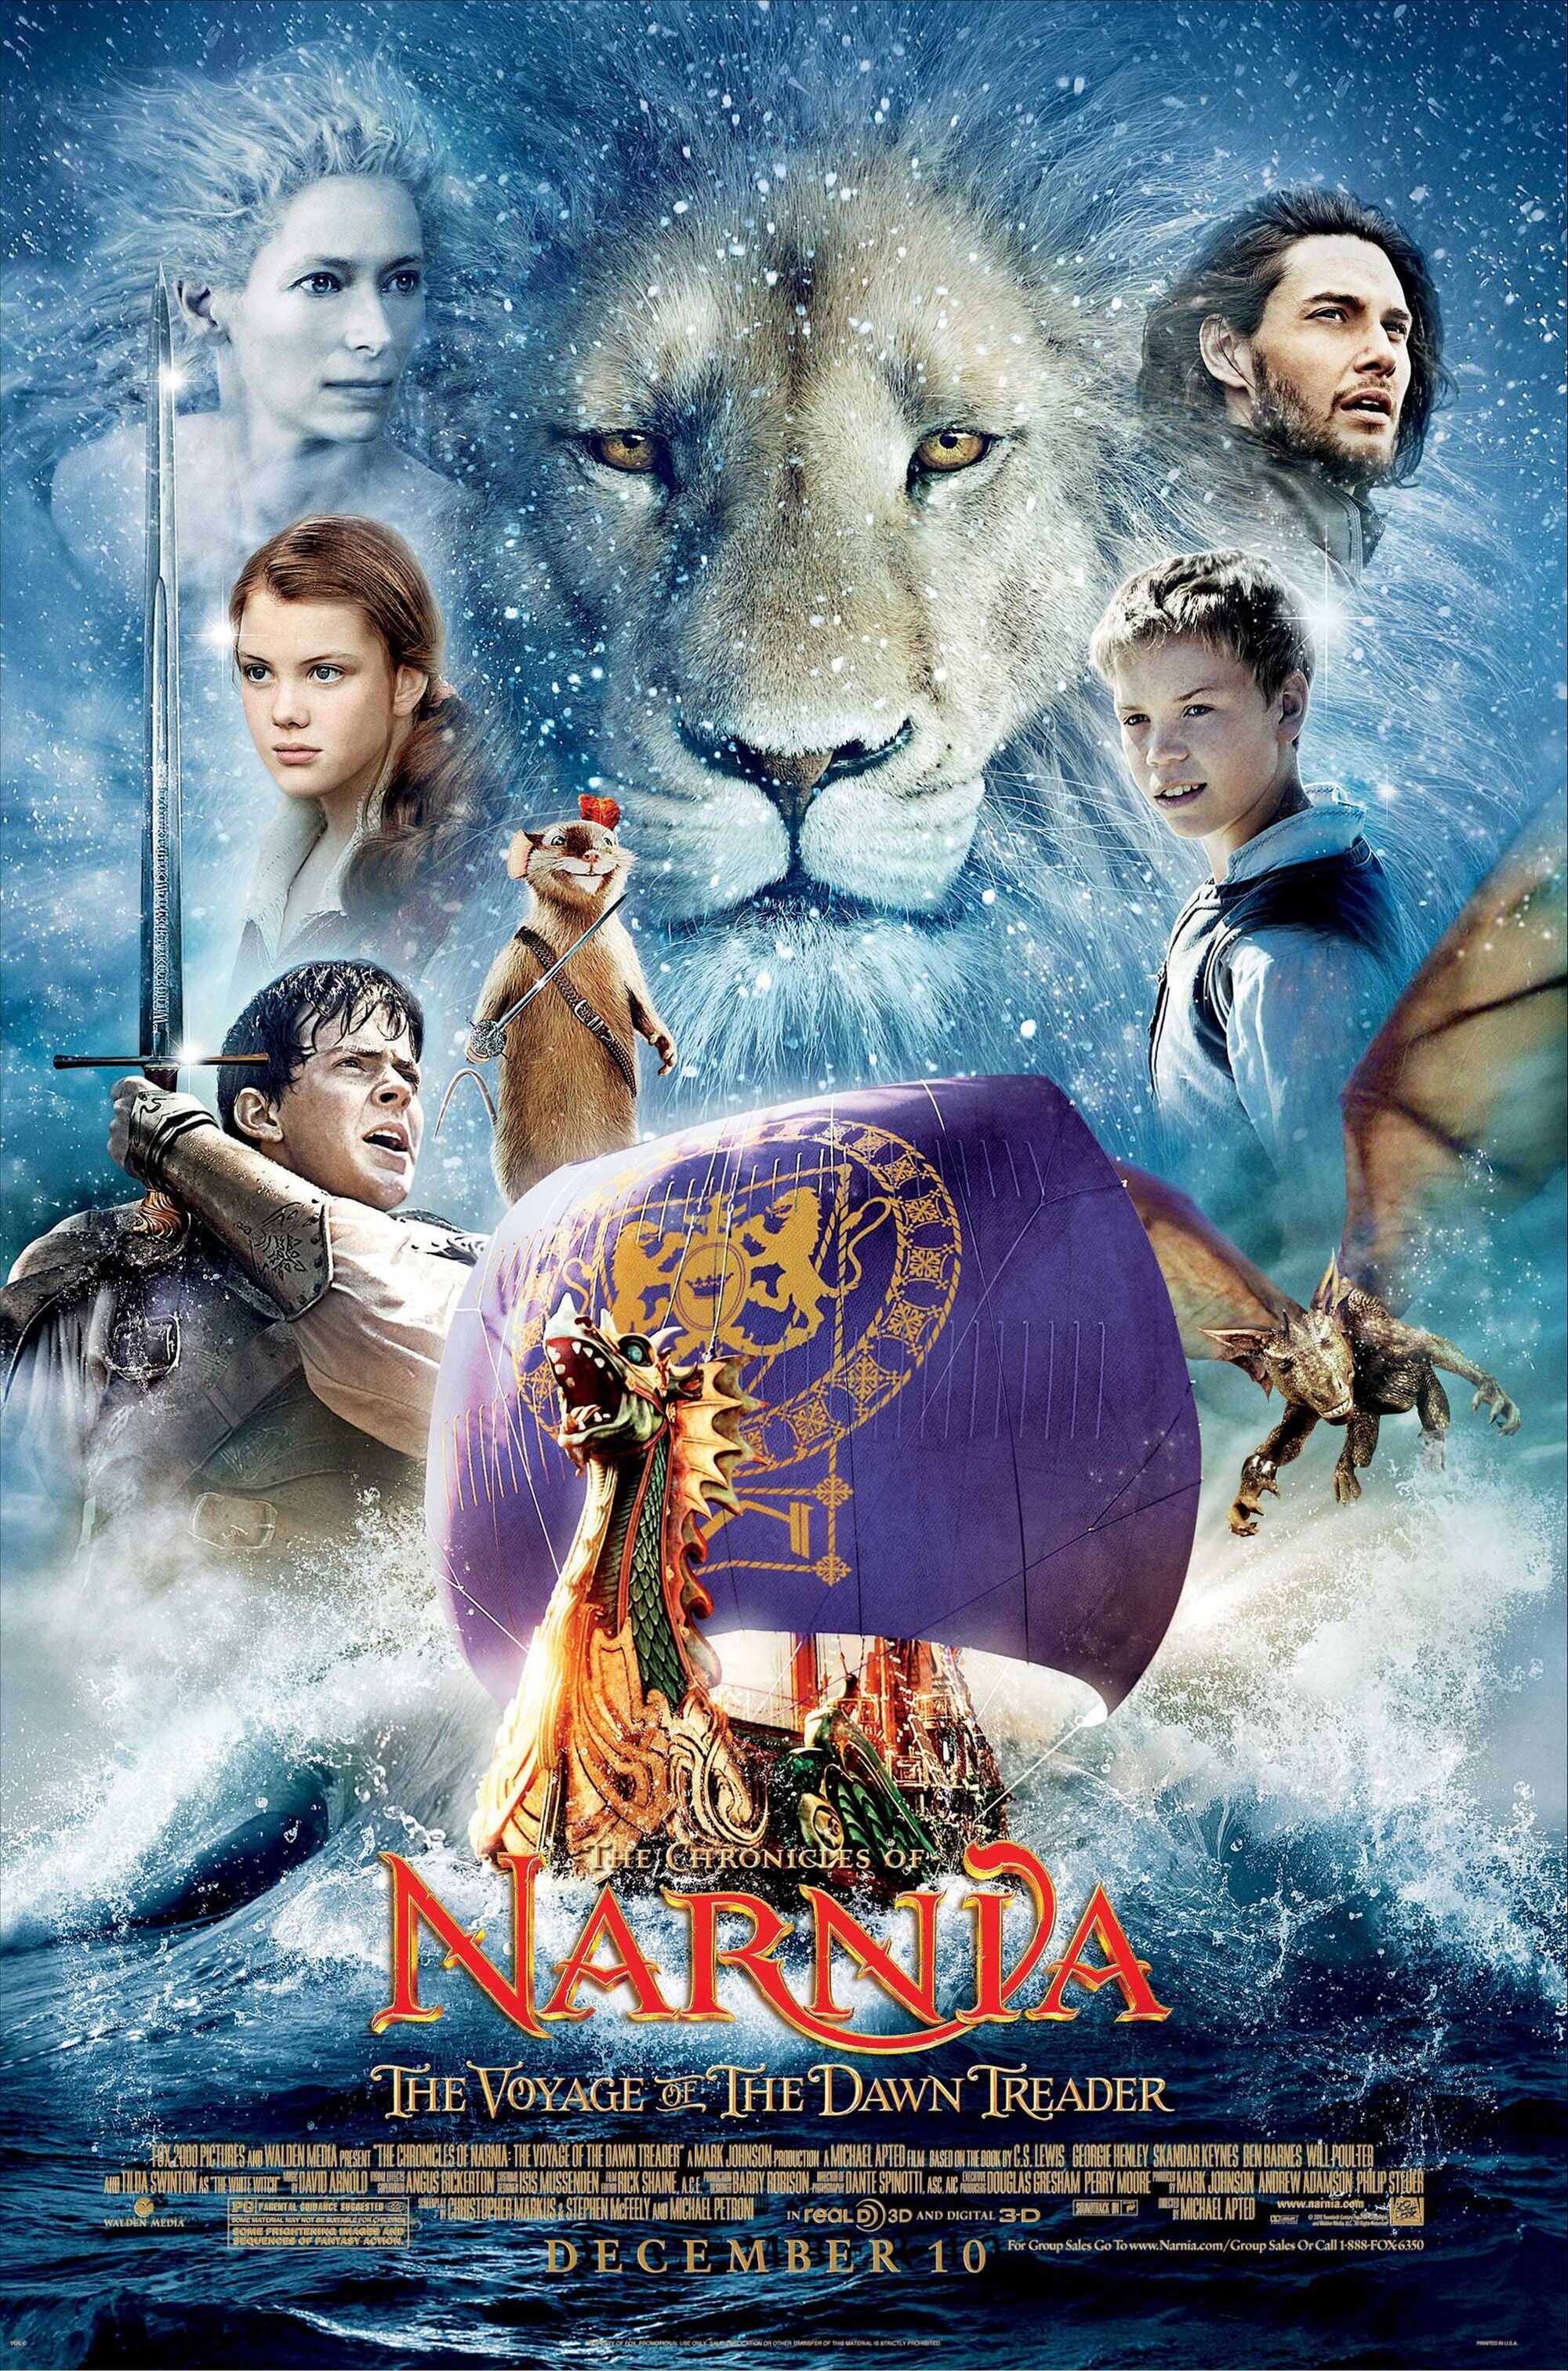 The Chronicles of Narnia The Voyage of the Dawn Treader อภินิหารตำนานแห่งนาร์เนีย 3 ตอน ผจญภัยโพ้นทะเล